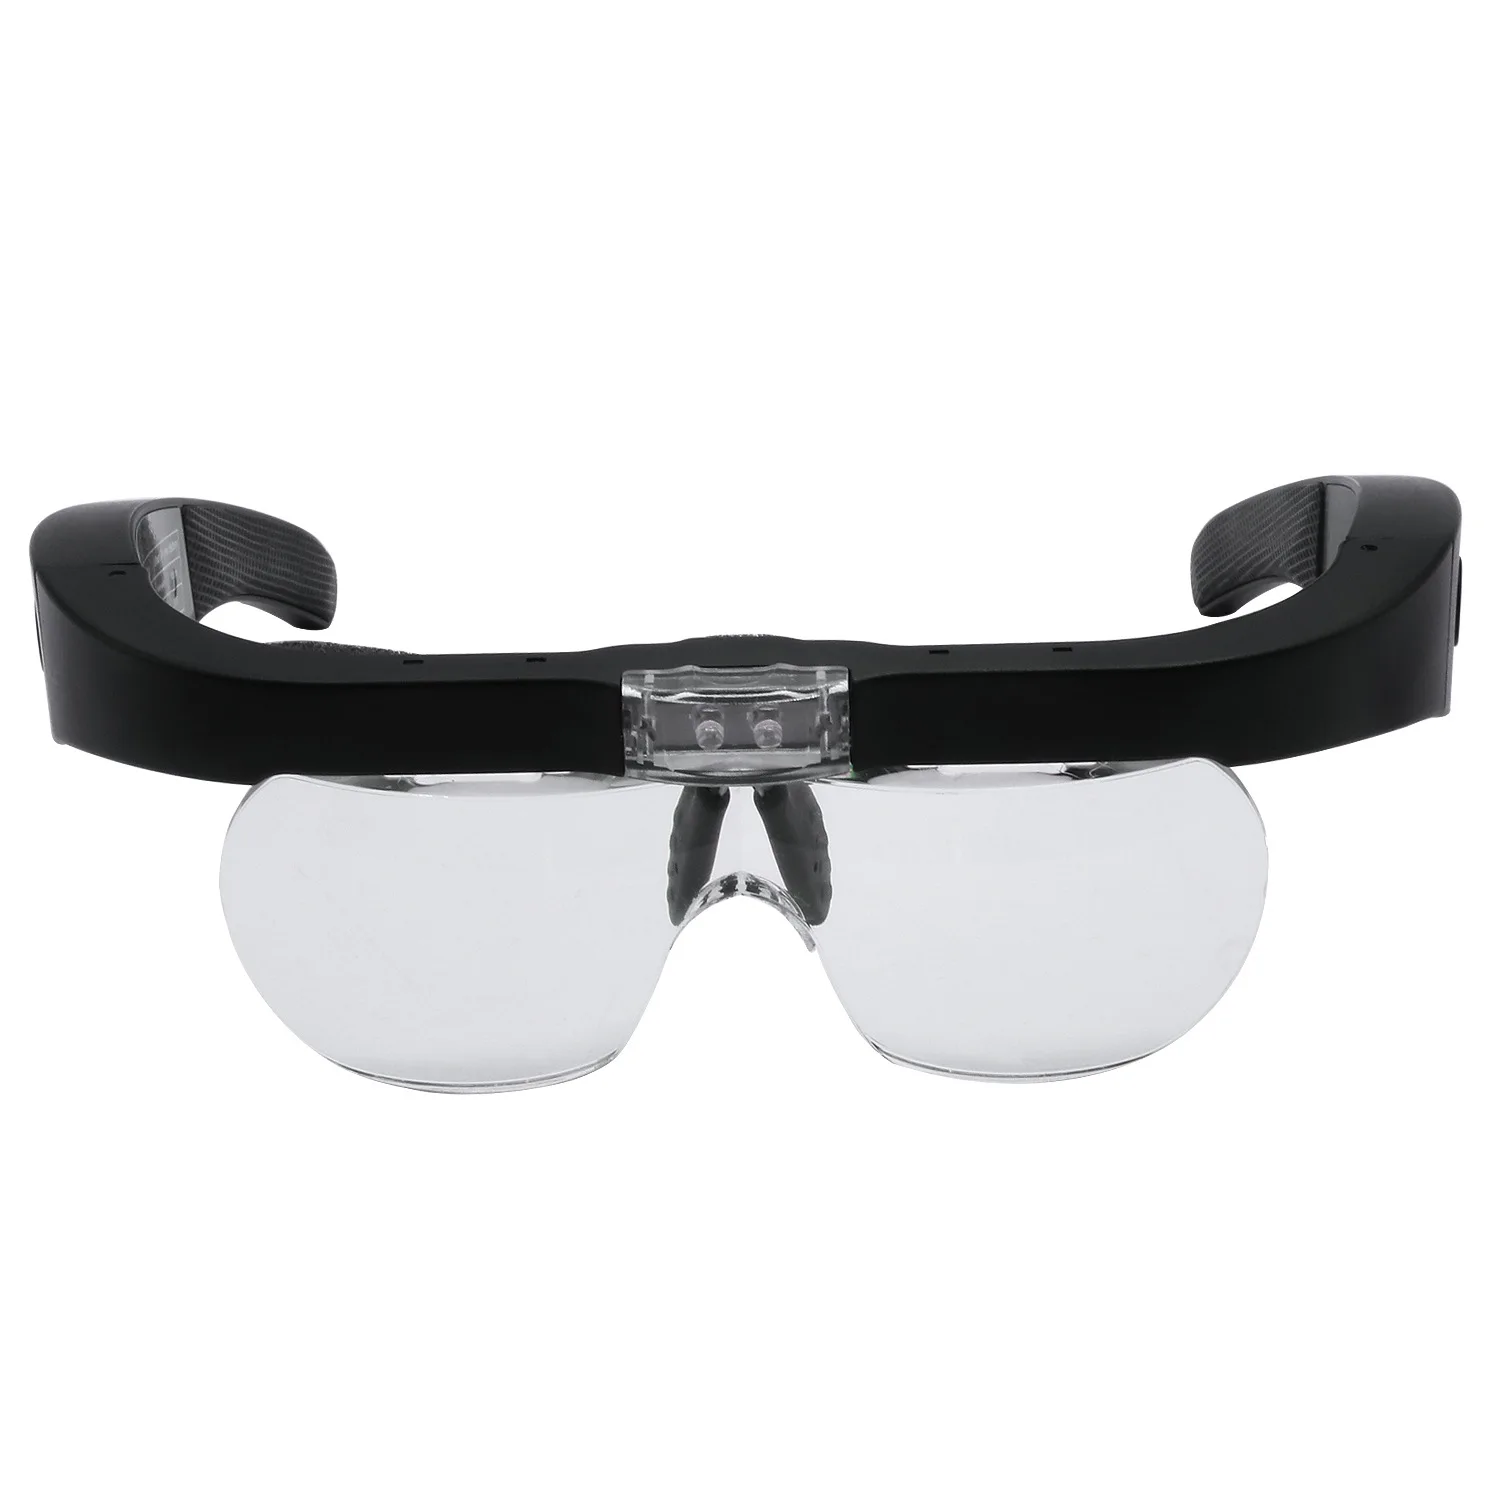 

SKYWAY Popular Detachable Lenses Rechargeable Head 1.5X 2.5X 3.5X 5X Reading Magnifier Glasses For Sale